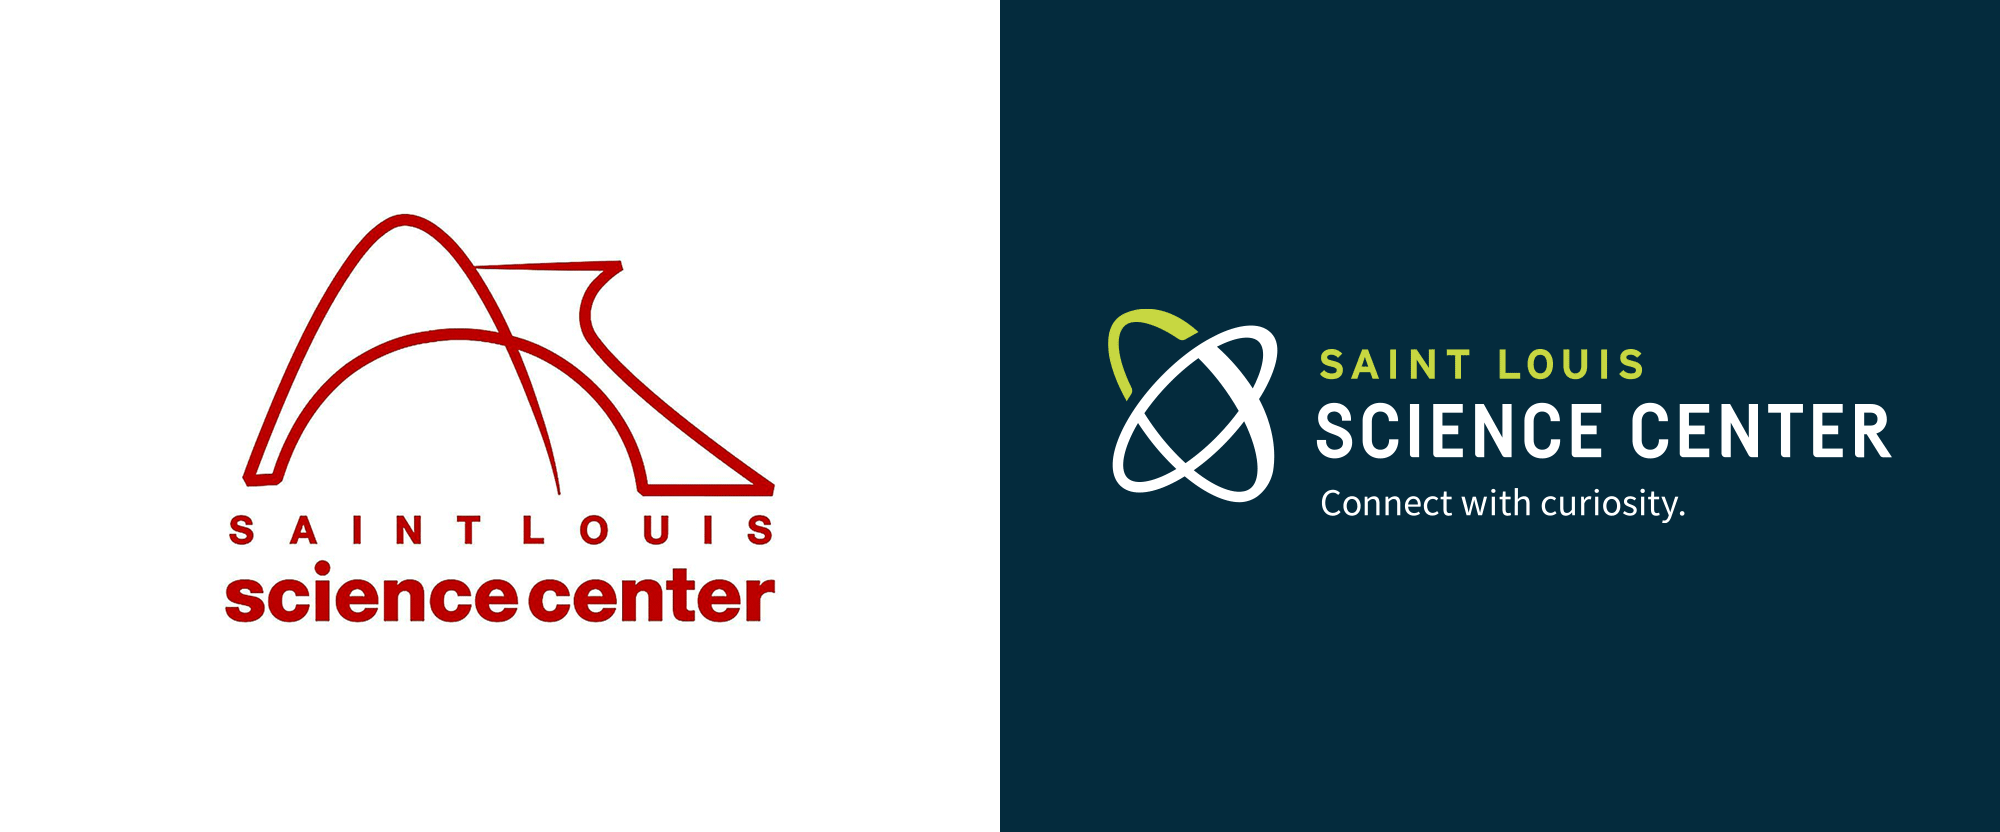 Saint-Louis Logo - Brand New: New Logo for Saint Louis Science Center by Atomicdust